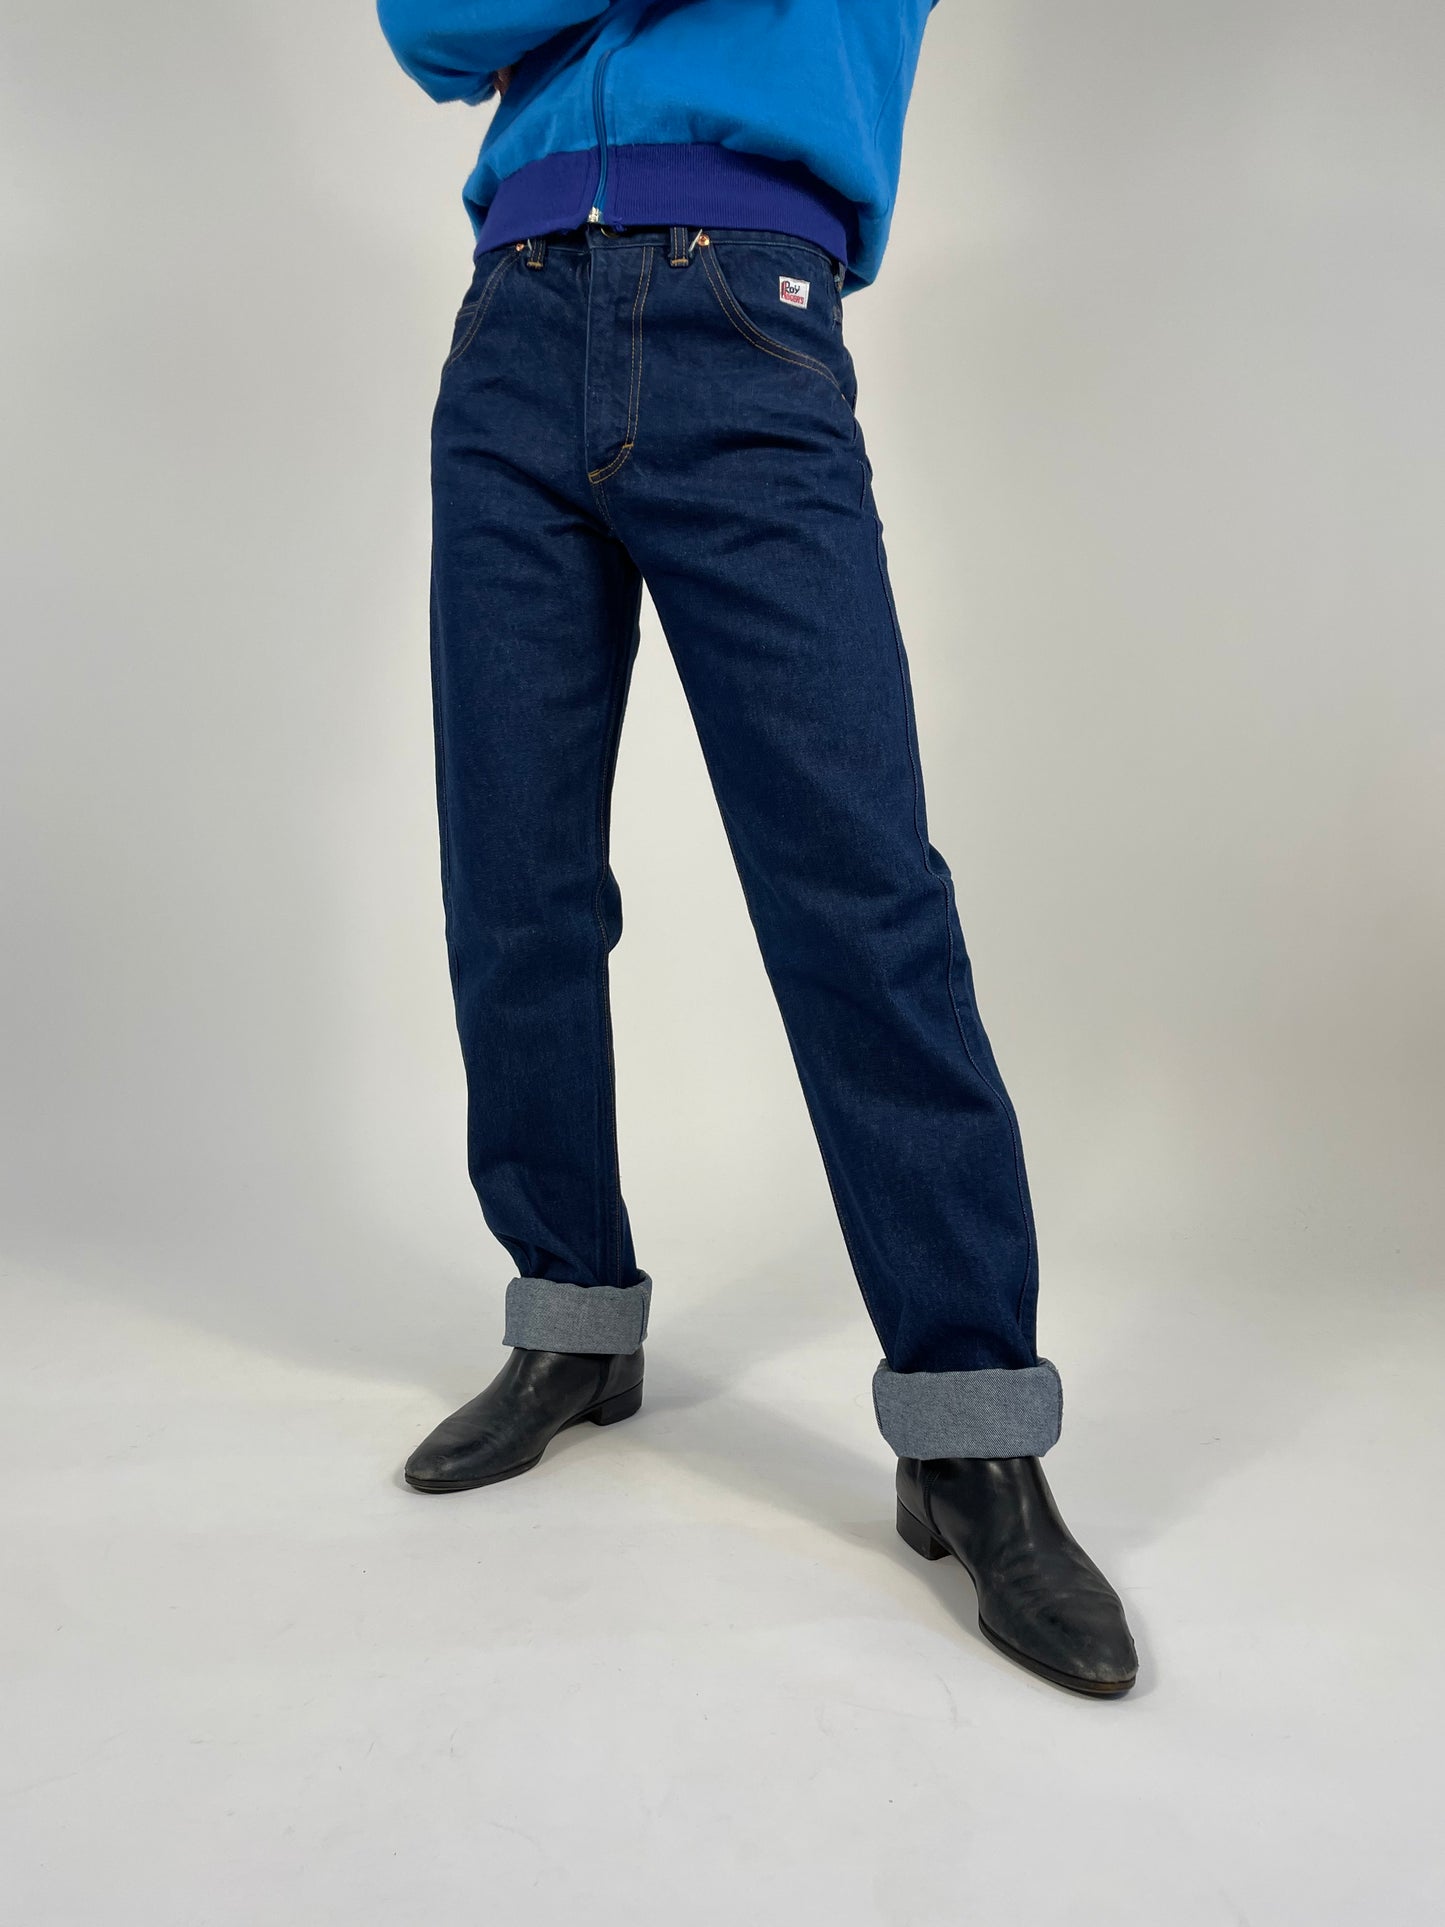 jeans-roy-rogers-vintage-uomo